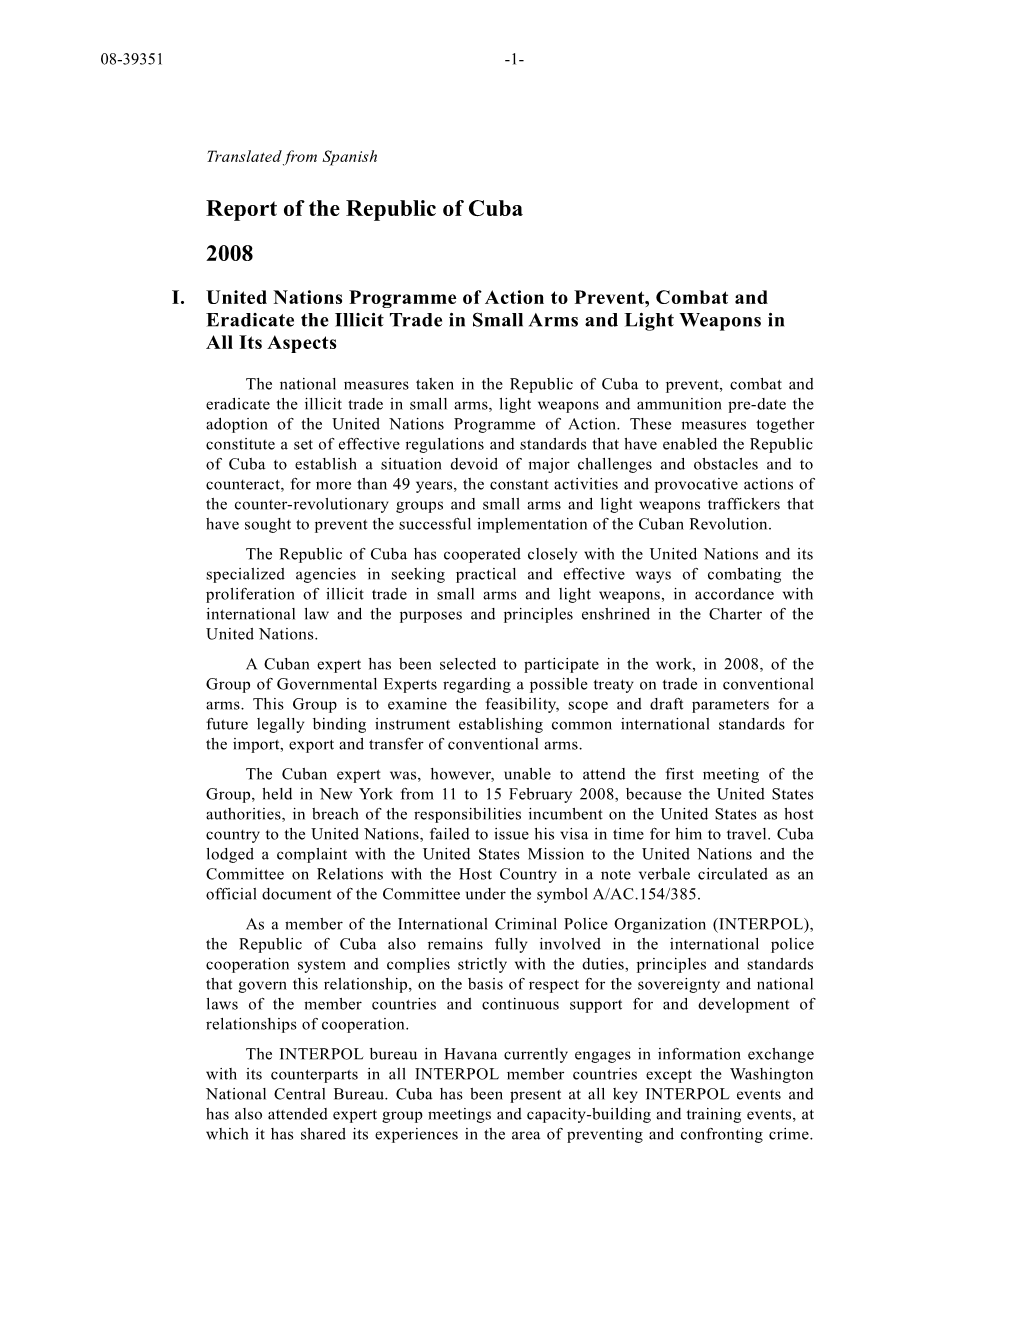 Report of the Republic of Cuba